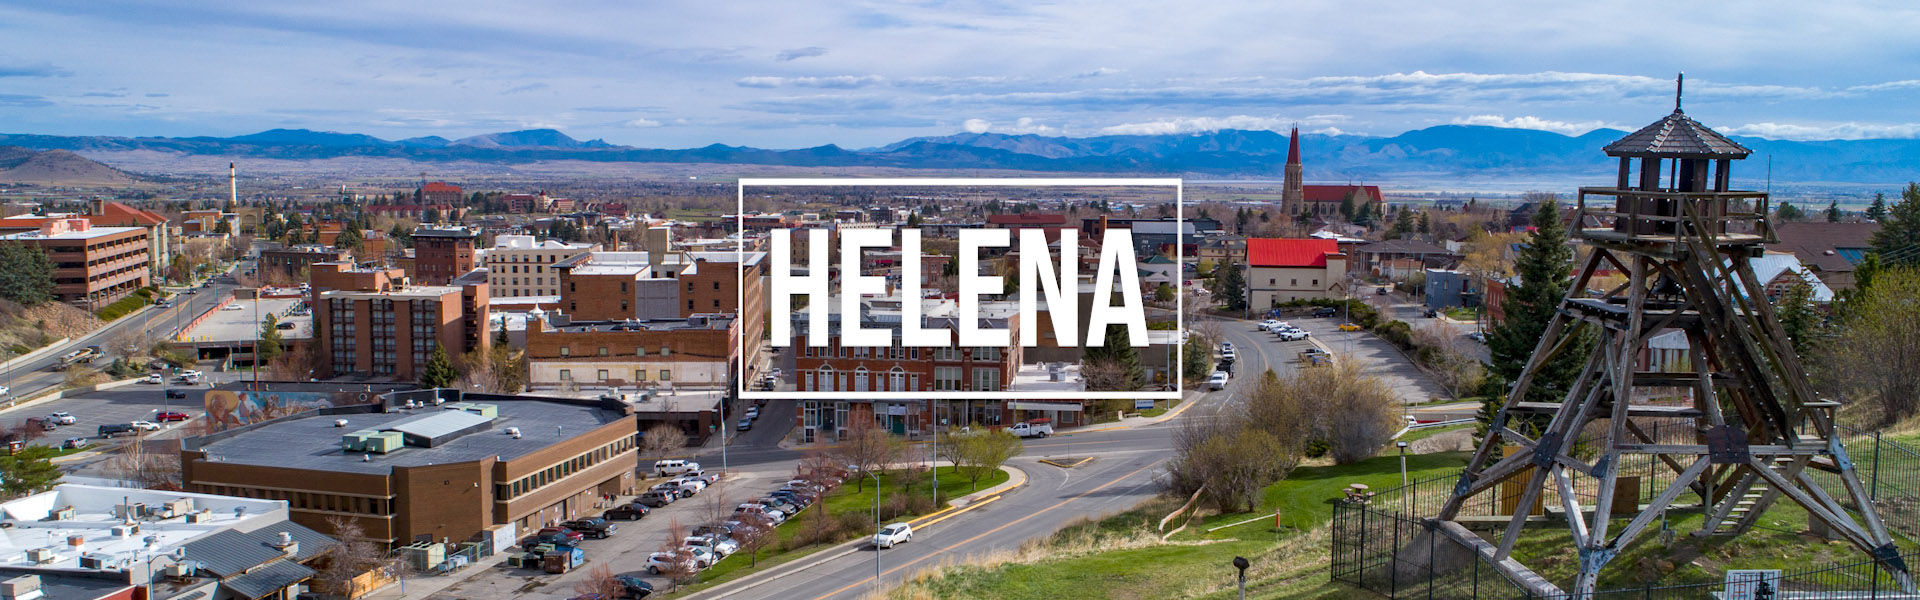 Helena MT Business Network Professional Week